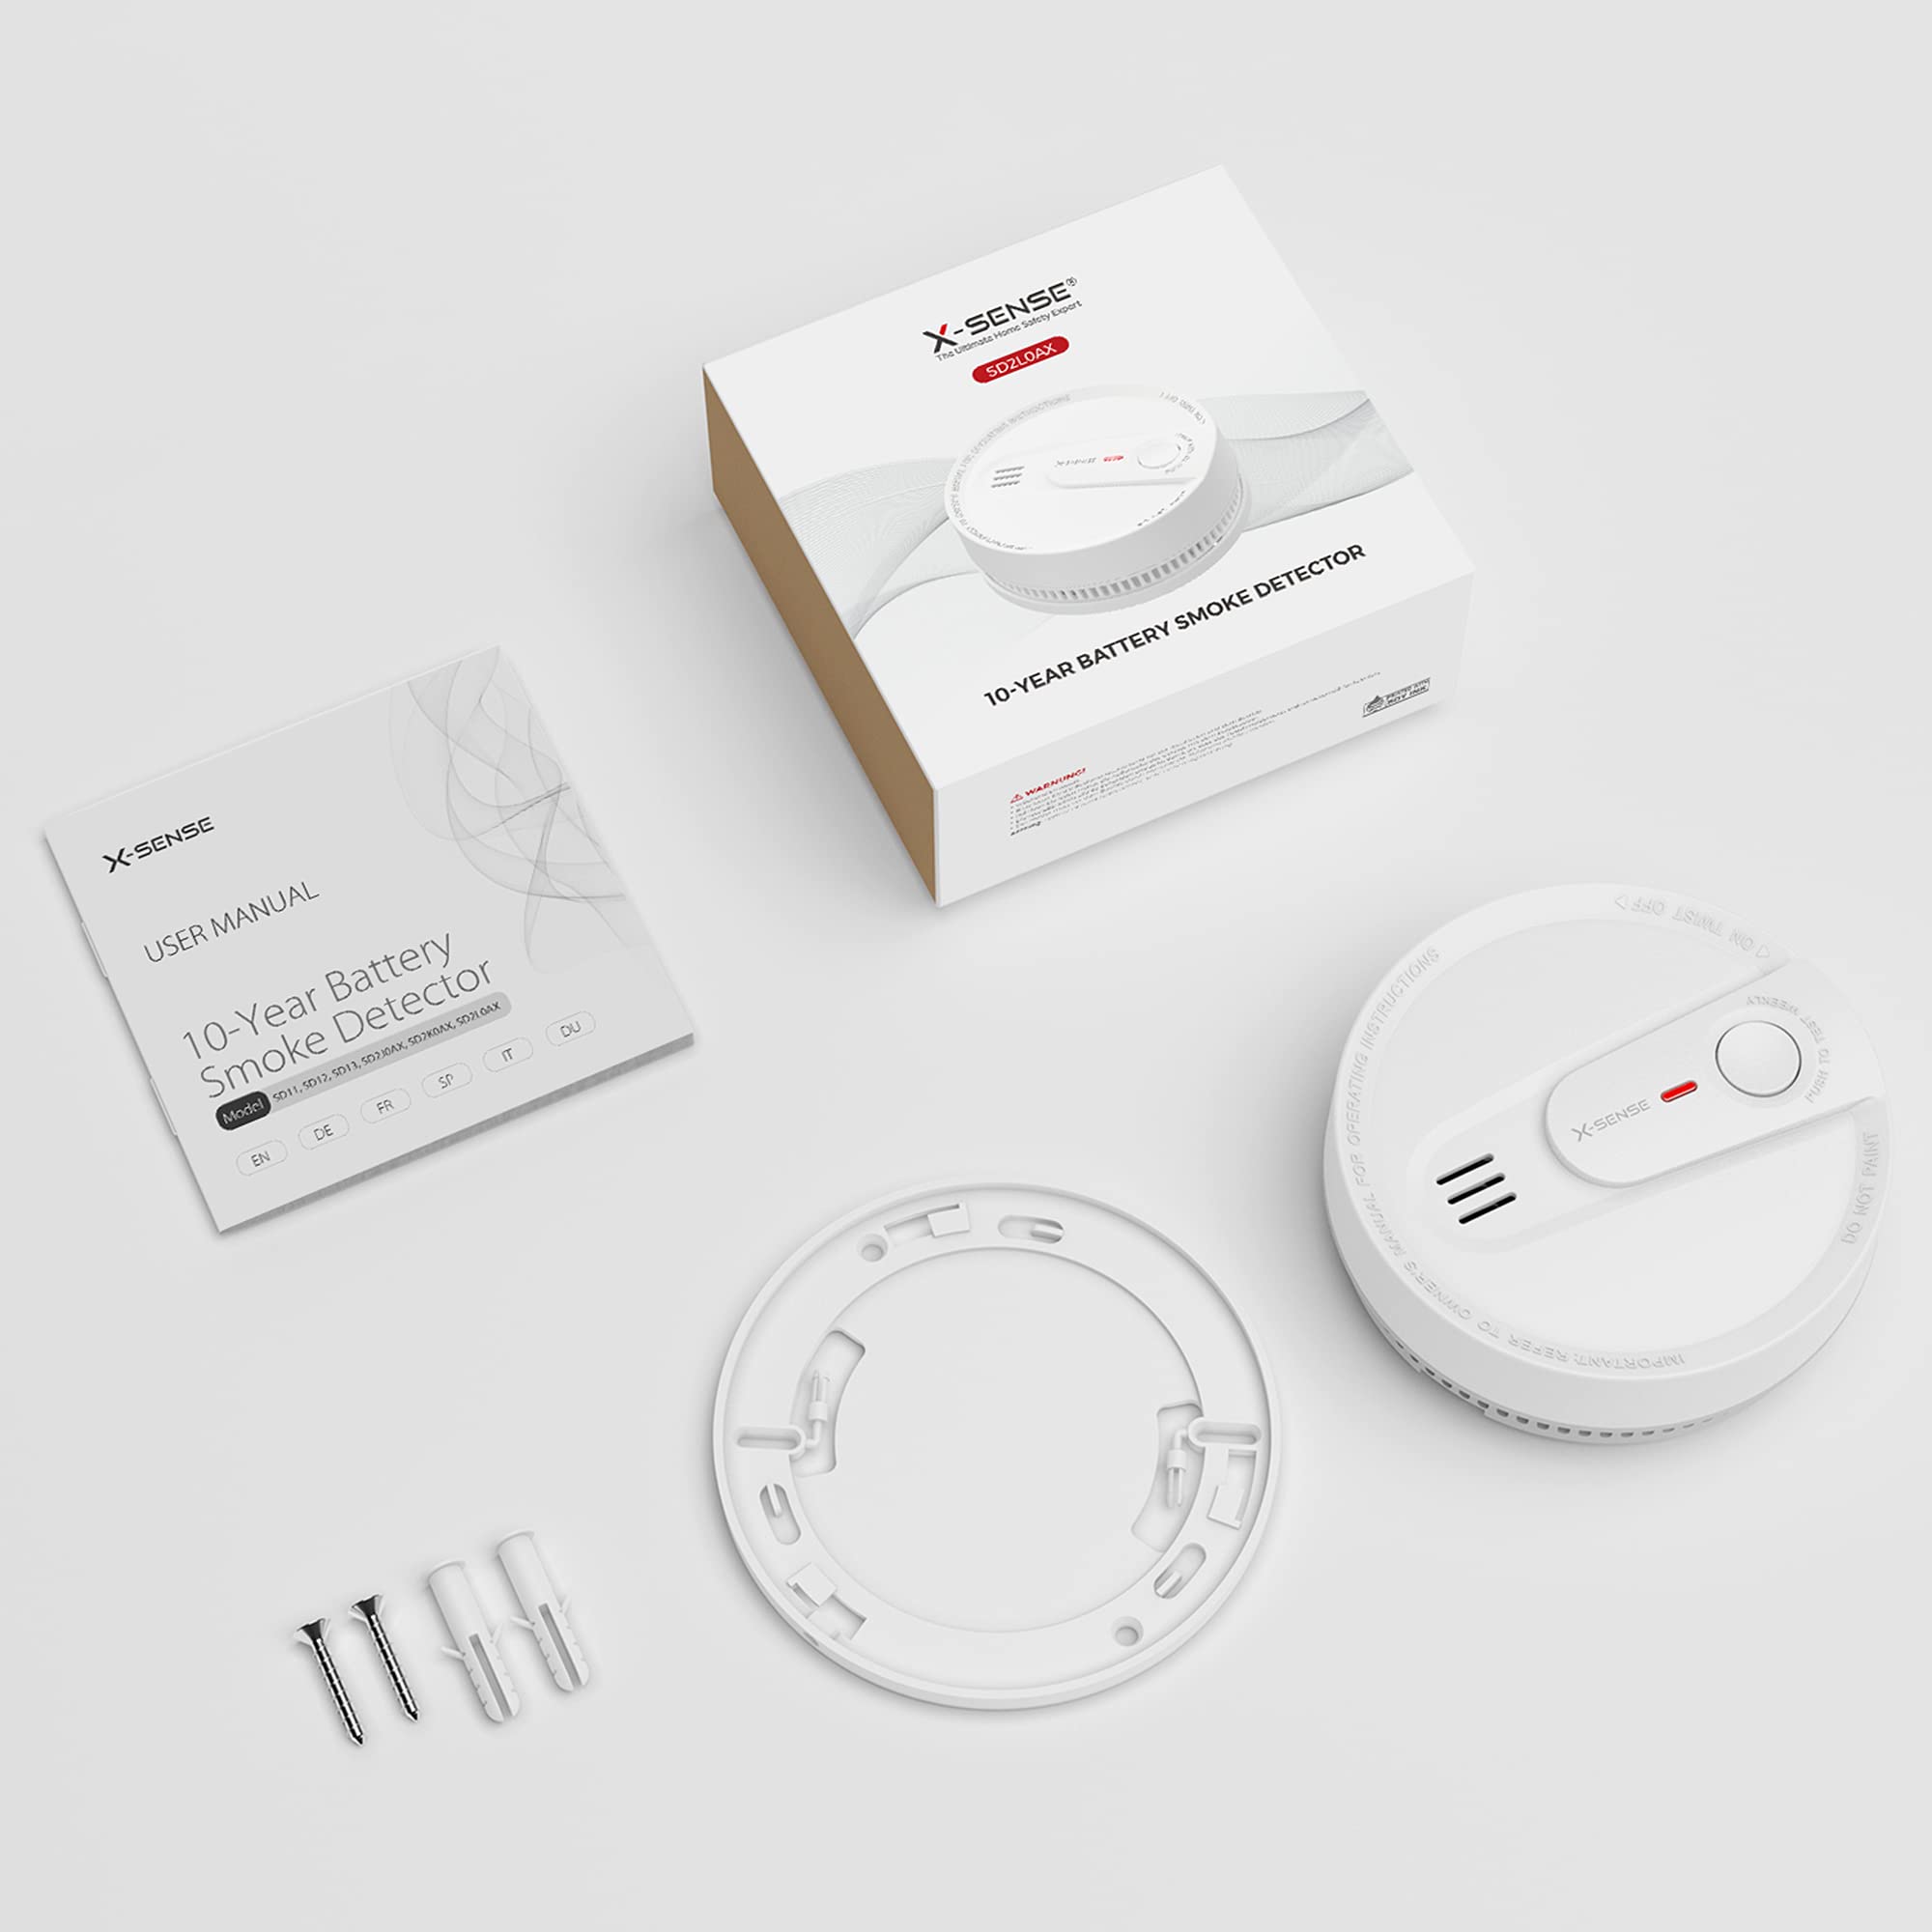 X-Sense Smoke Detector, 10-Year Battery Smoke Fire Alarm with Photoelectric Sensor, LED Indicator & Silence Button, 1-Pack